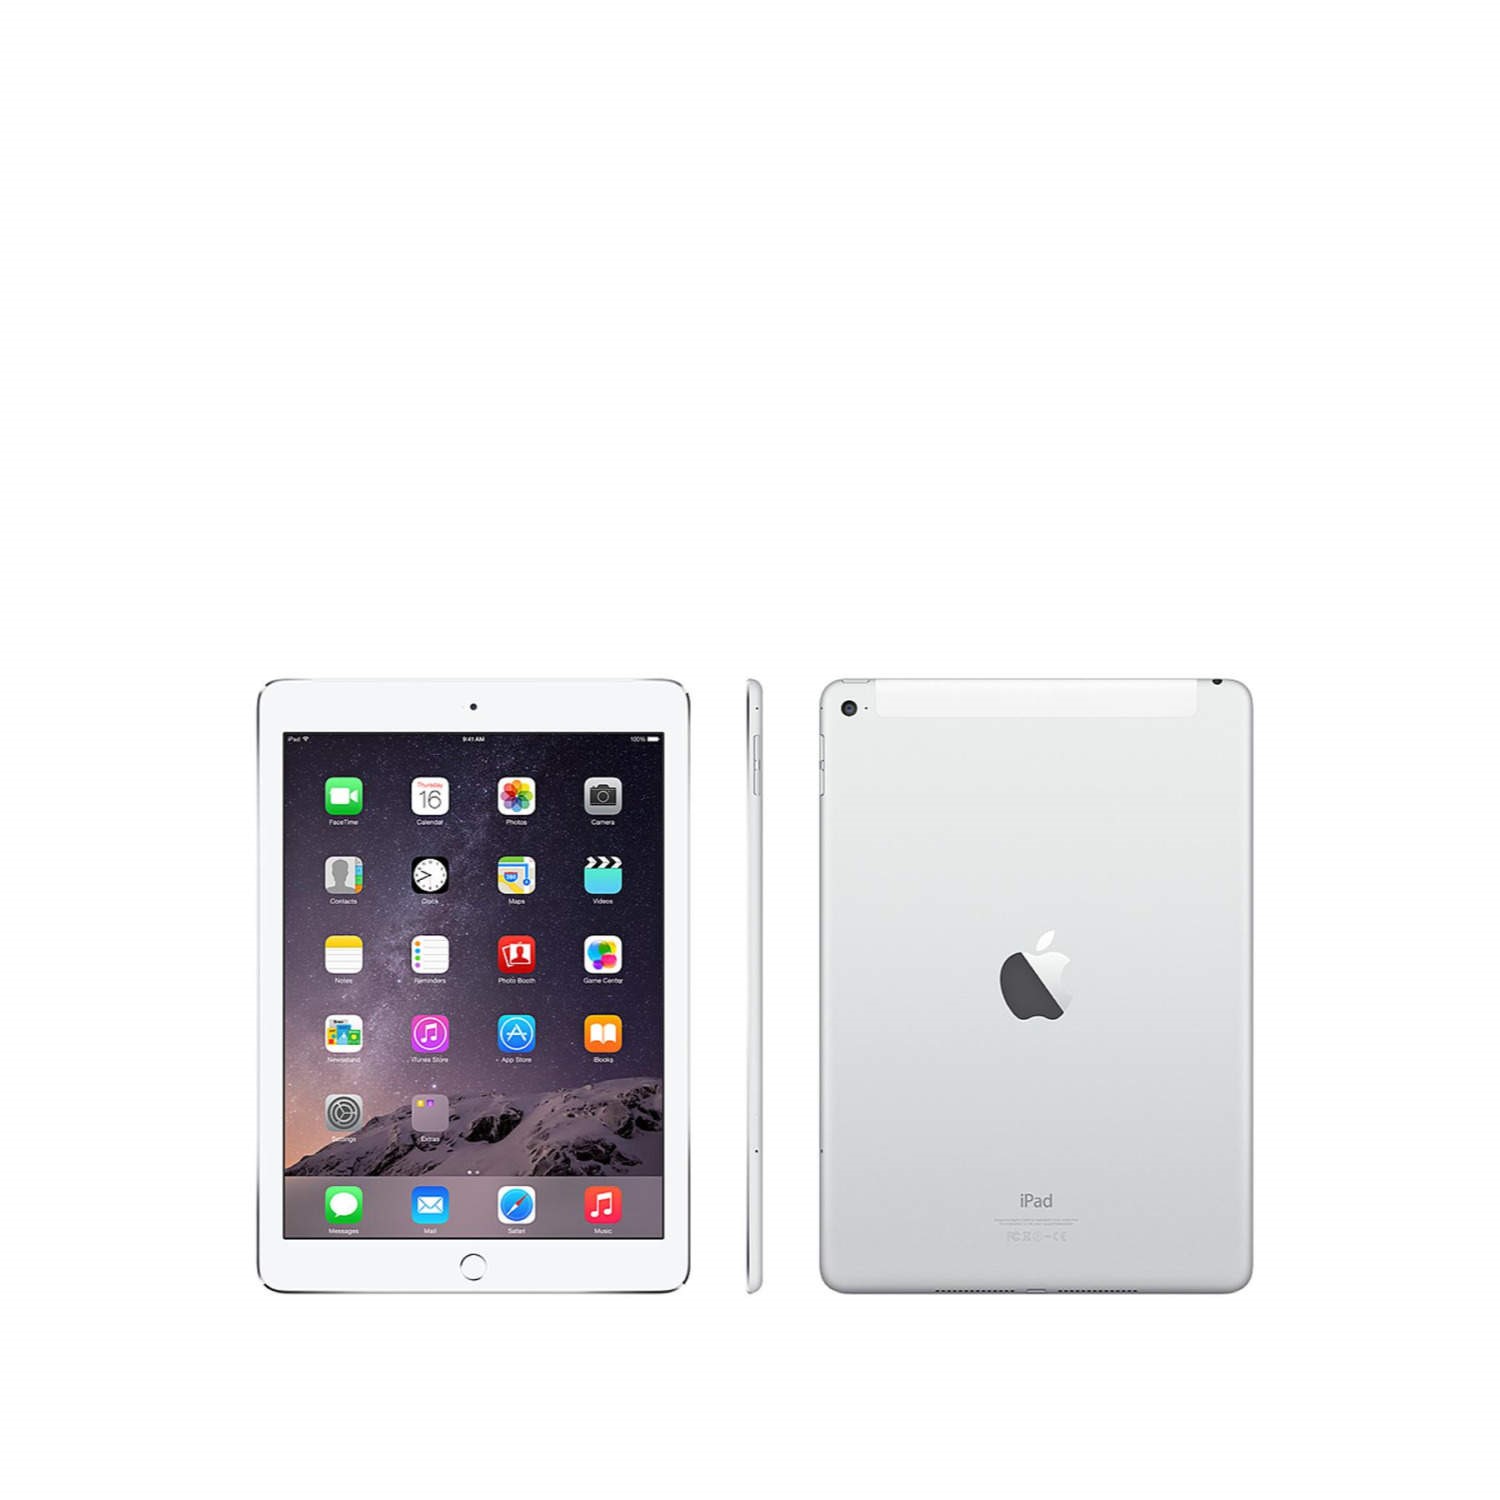 Apple iPad Air 2 16GB 9.7 inch Wi-Fi Cellular/4G Tablet in Silver